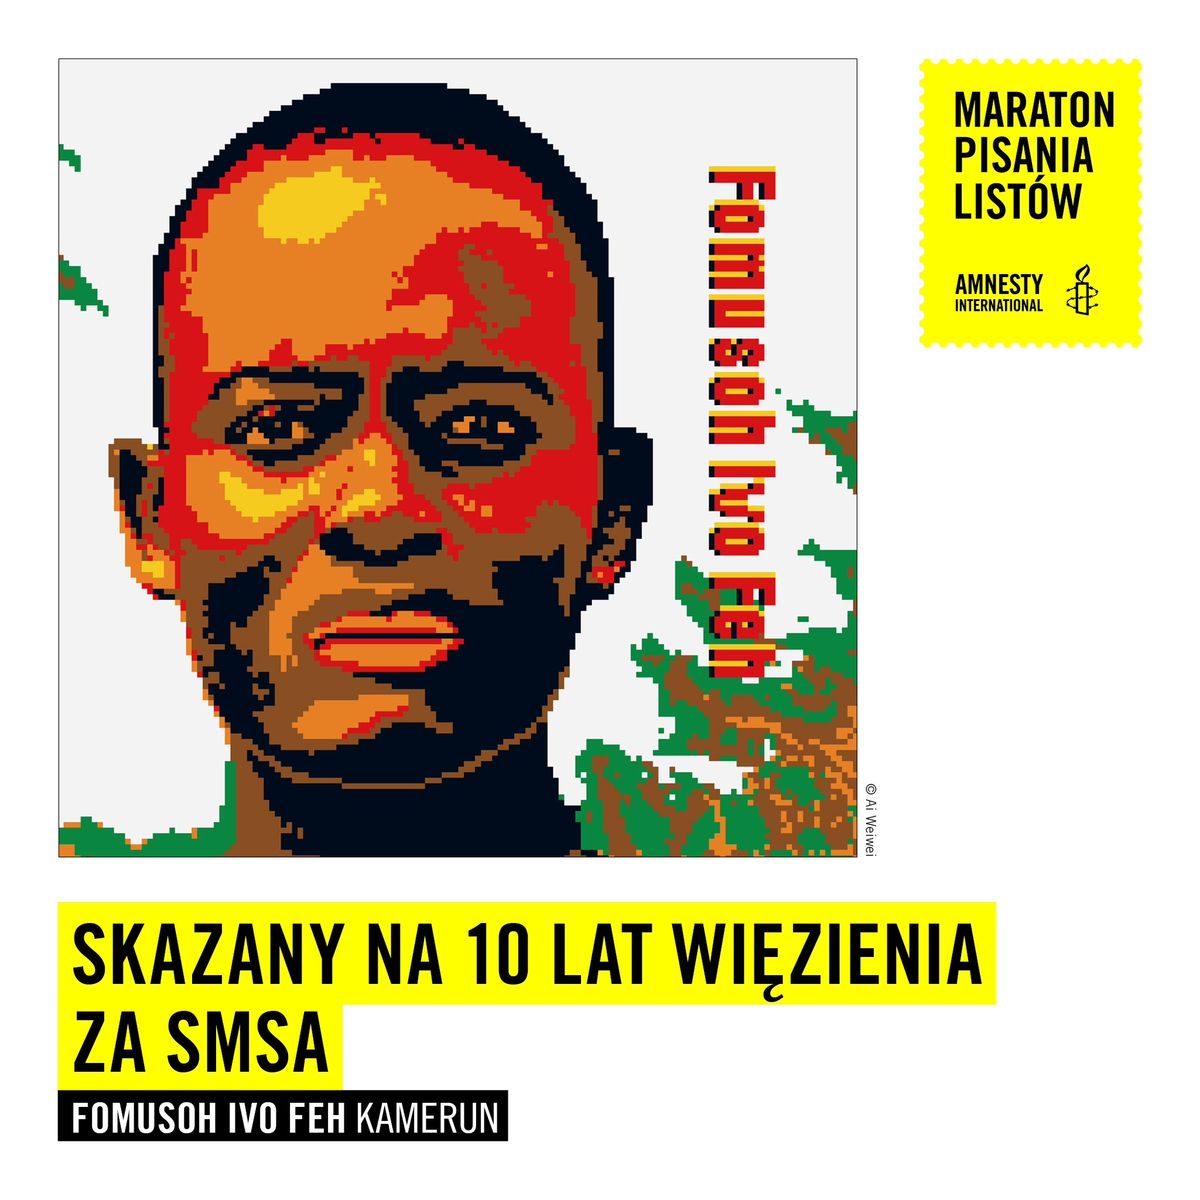 Maraton pisania listów Amnesty International: KAMERUN Fomusoh Ivo Feh